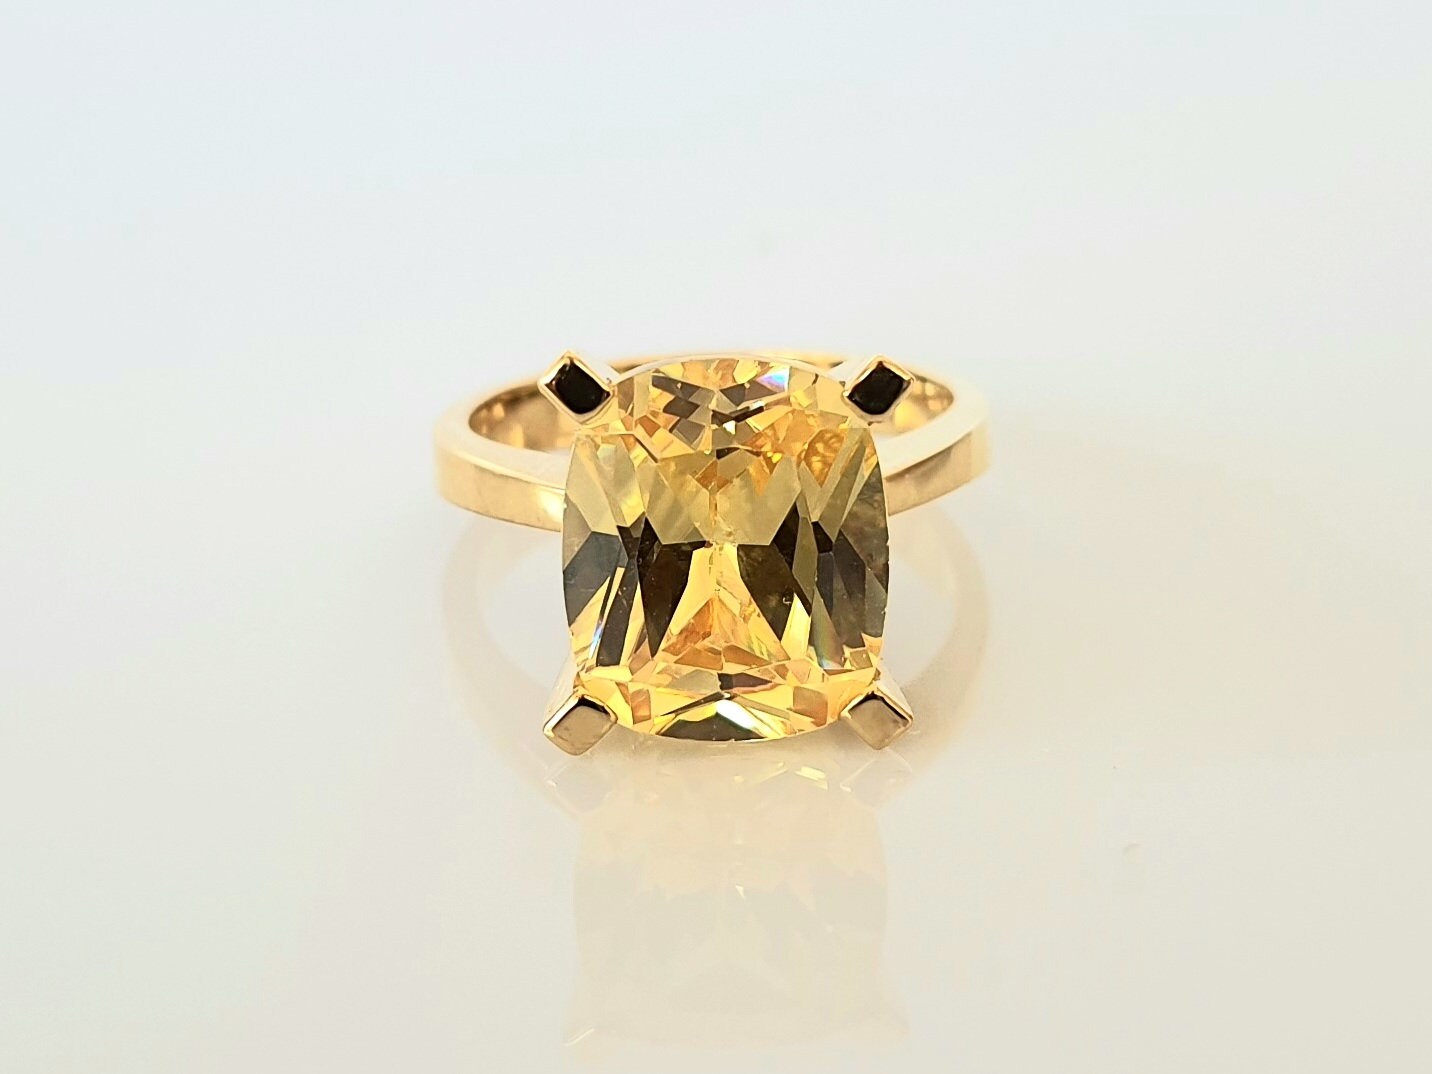 Owal Shape Yellow Stone With Diamond Delicate Design Gold Plated Ring -  Style A993, सोने का पानी चढ़ी हुई अंगूठी - Soni Fashion, Rajkot | ID:  2851487711673